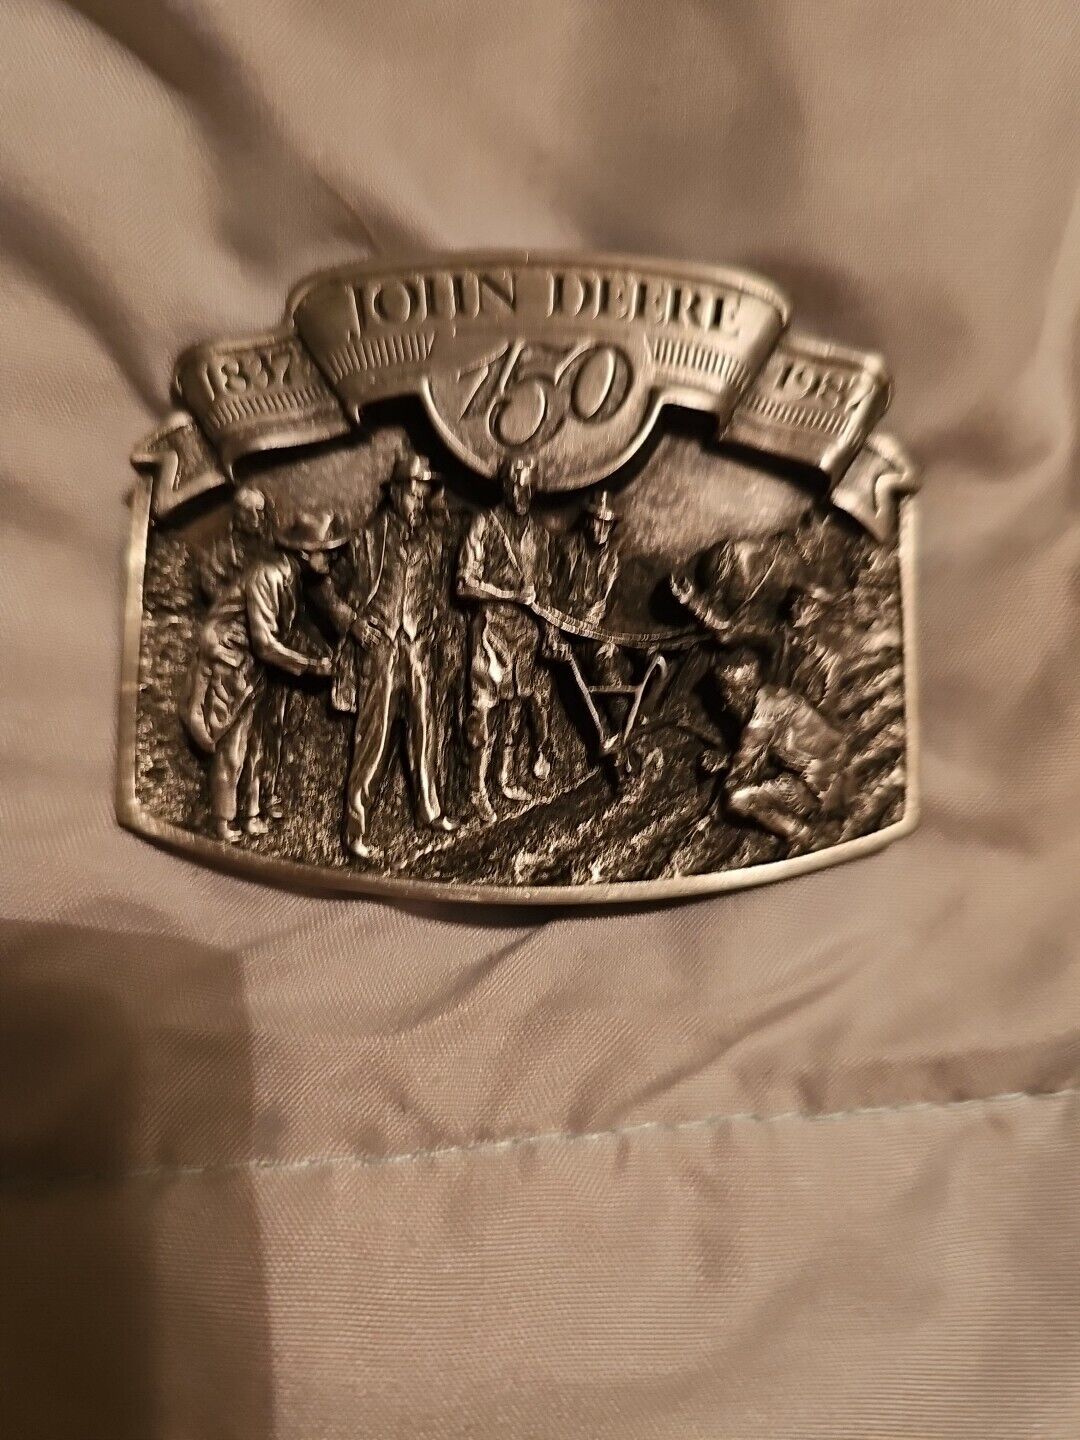 VTG JOHN DEERE 150TH Silver Plated Belt Buckle Serial Numbered